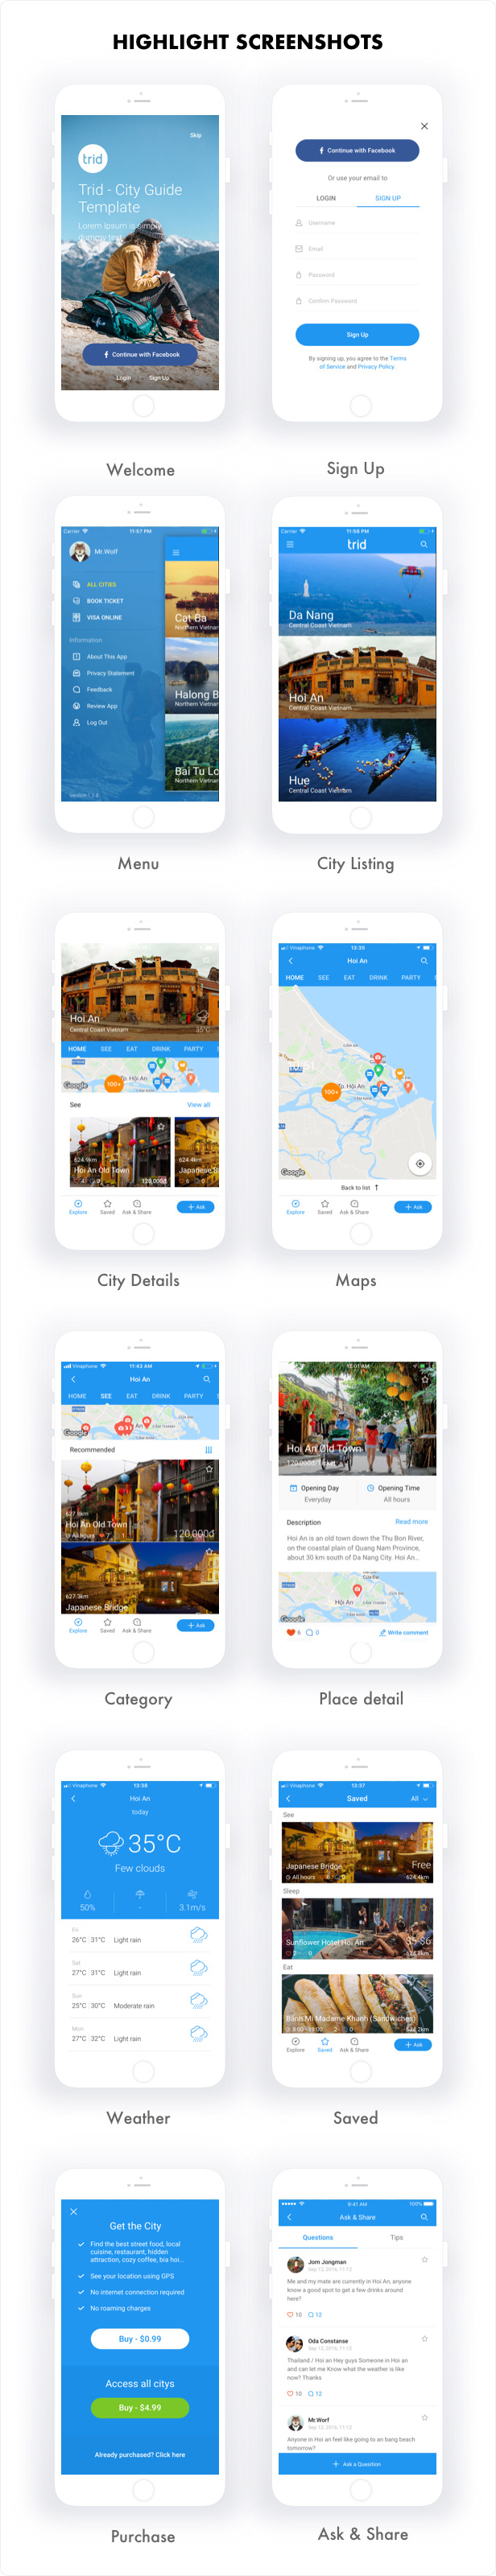 Best City Guide Mobile App